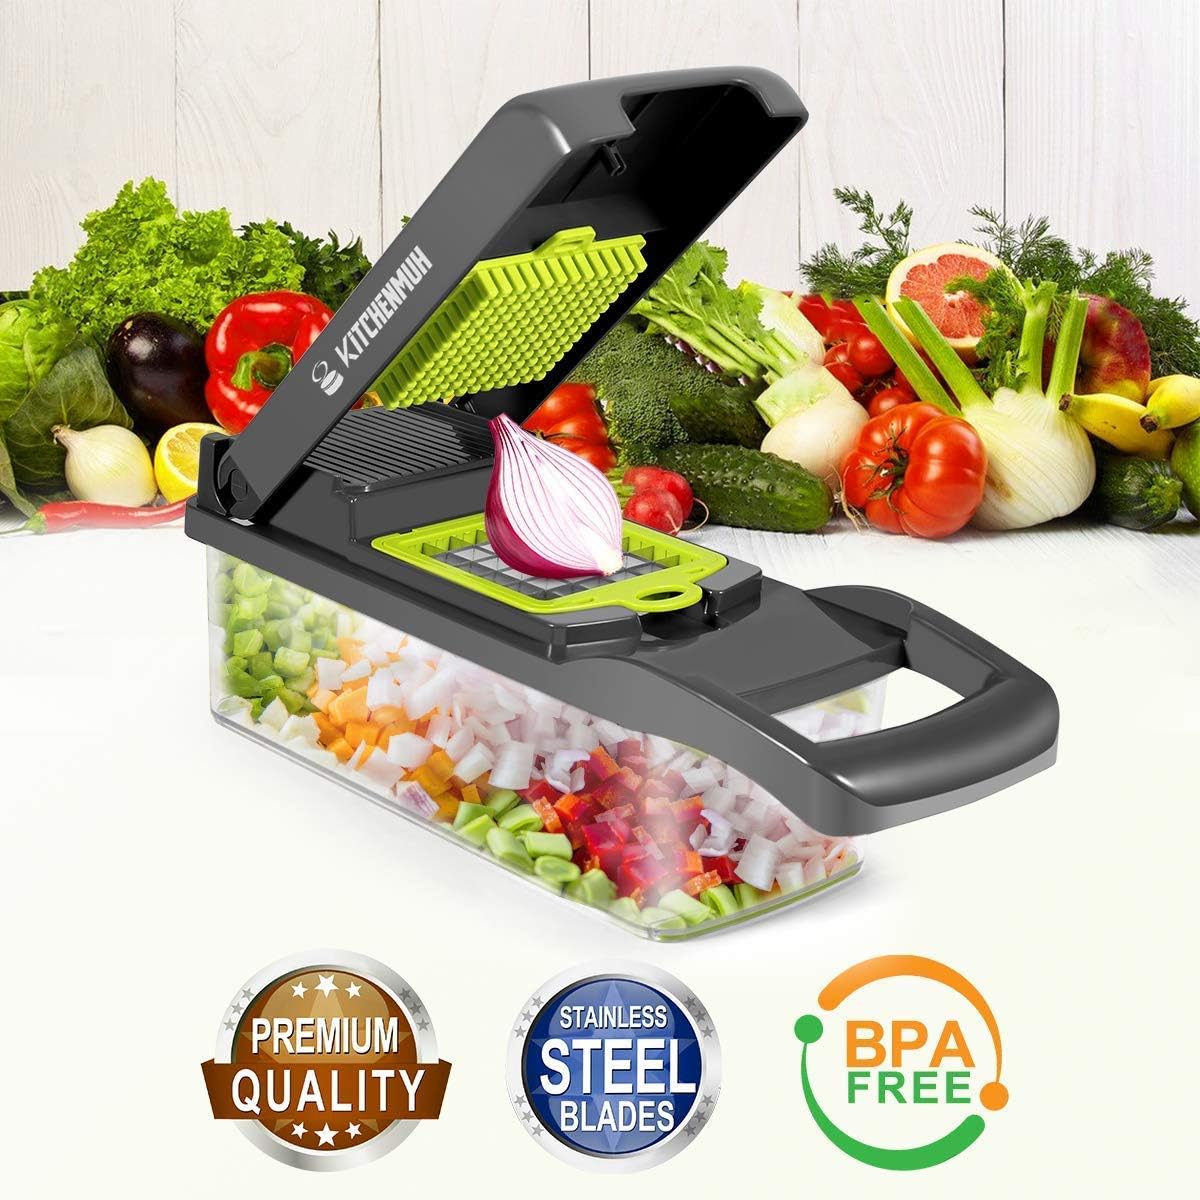 A 12in1 Multifunctional Kitchen Vegetable Slicer Dicer Adjustable Mandolin Chopper is placed next to some vegetables